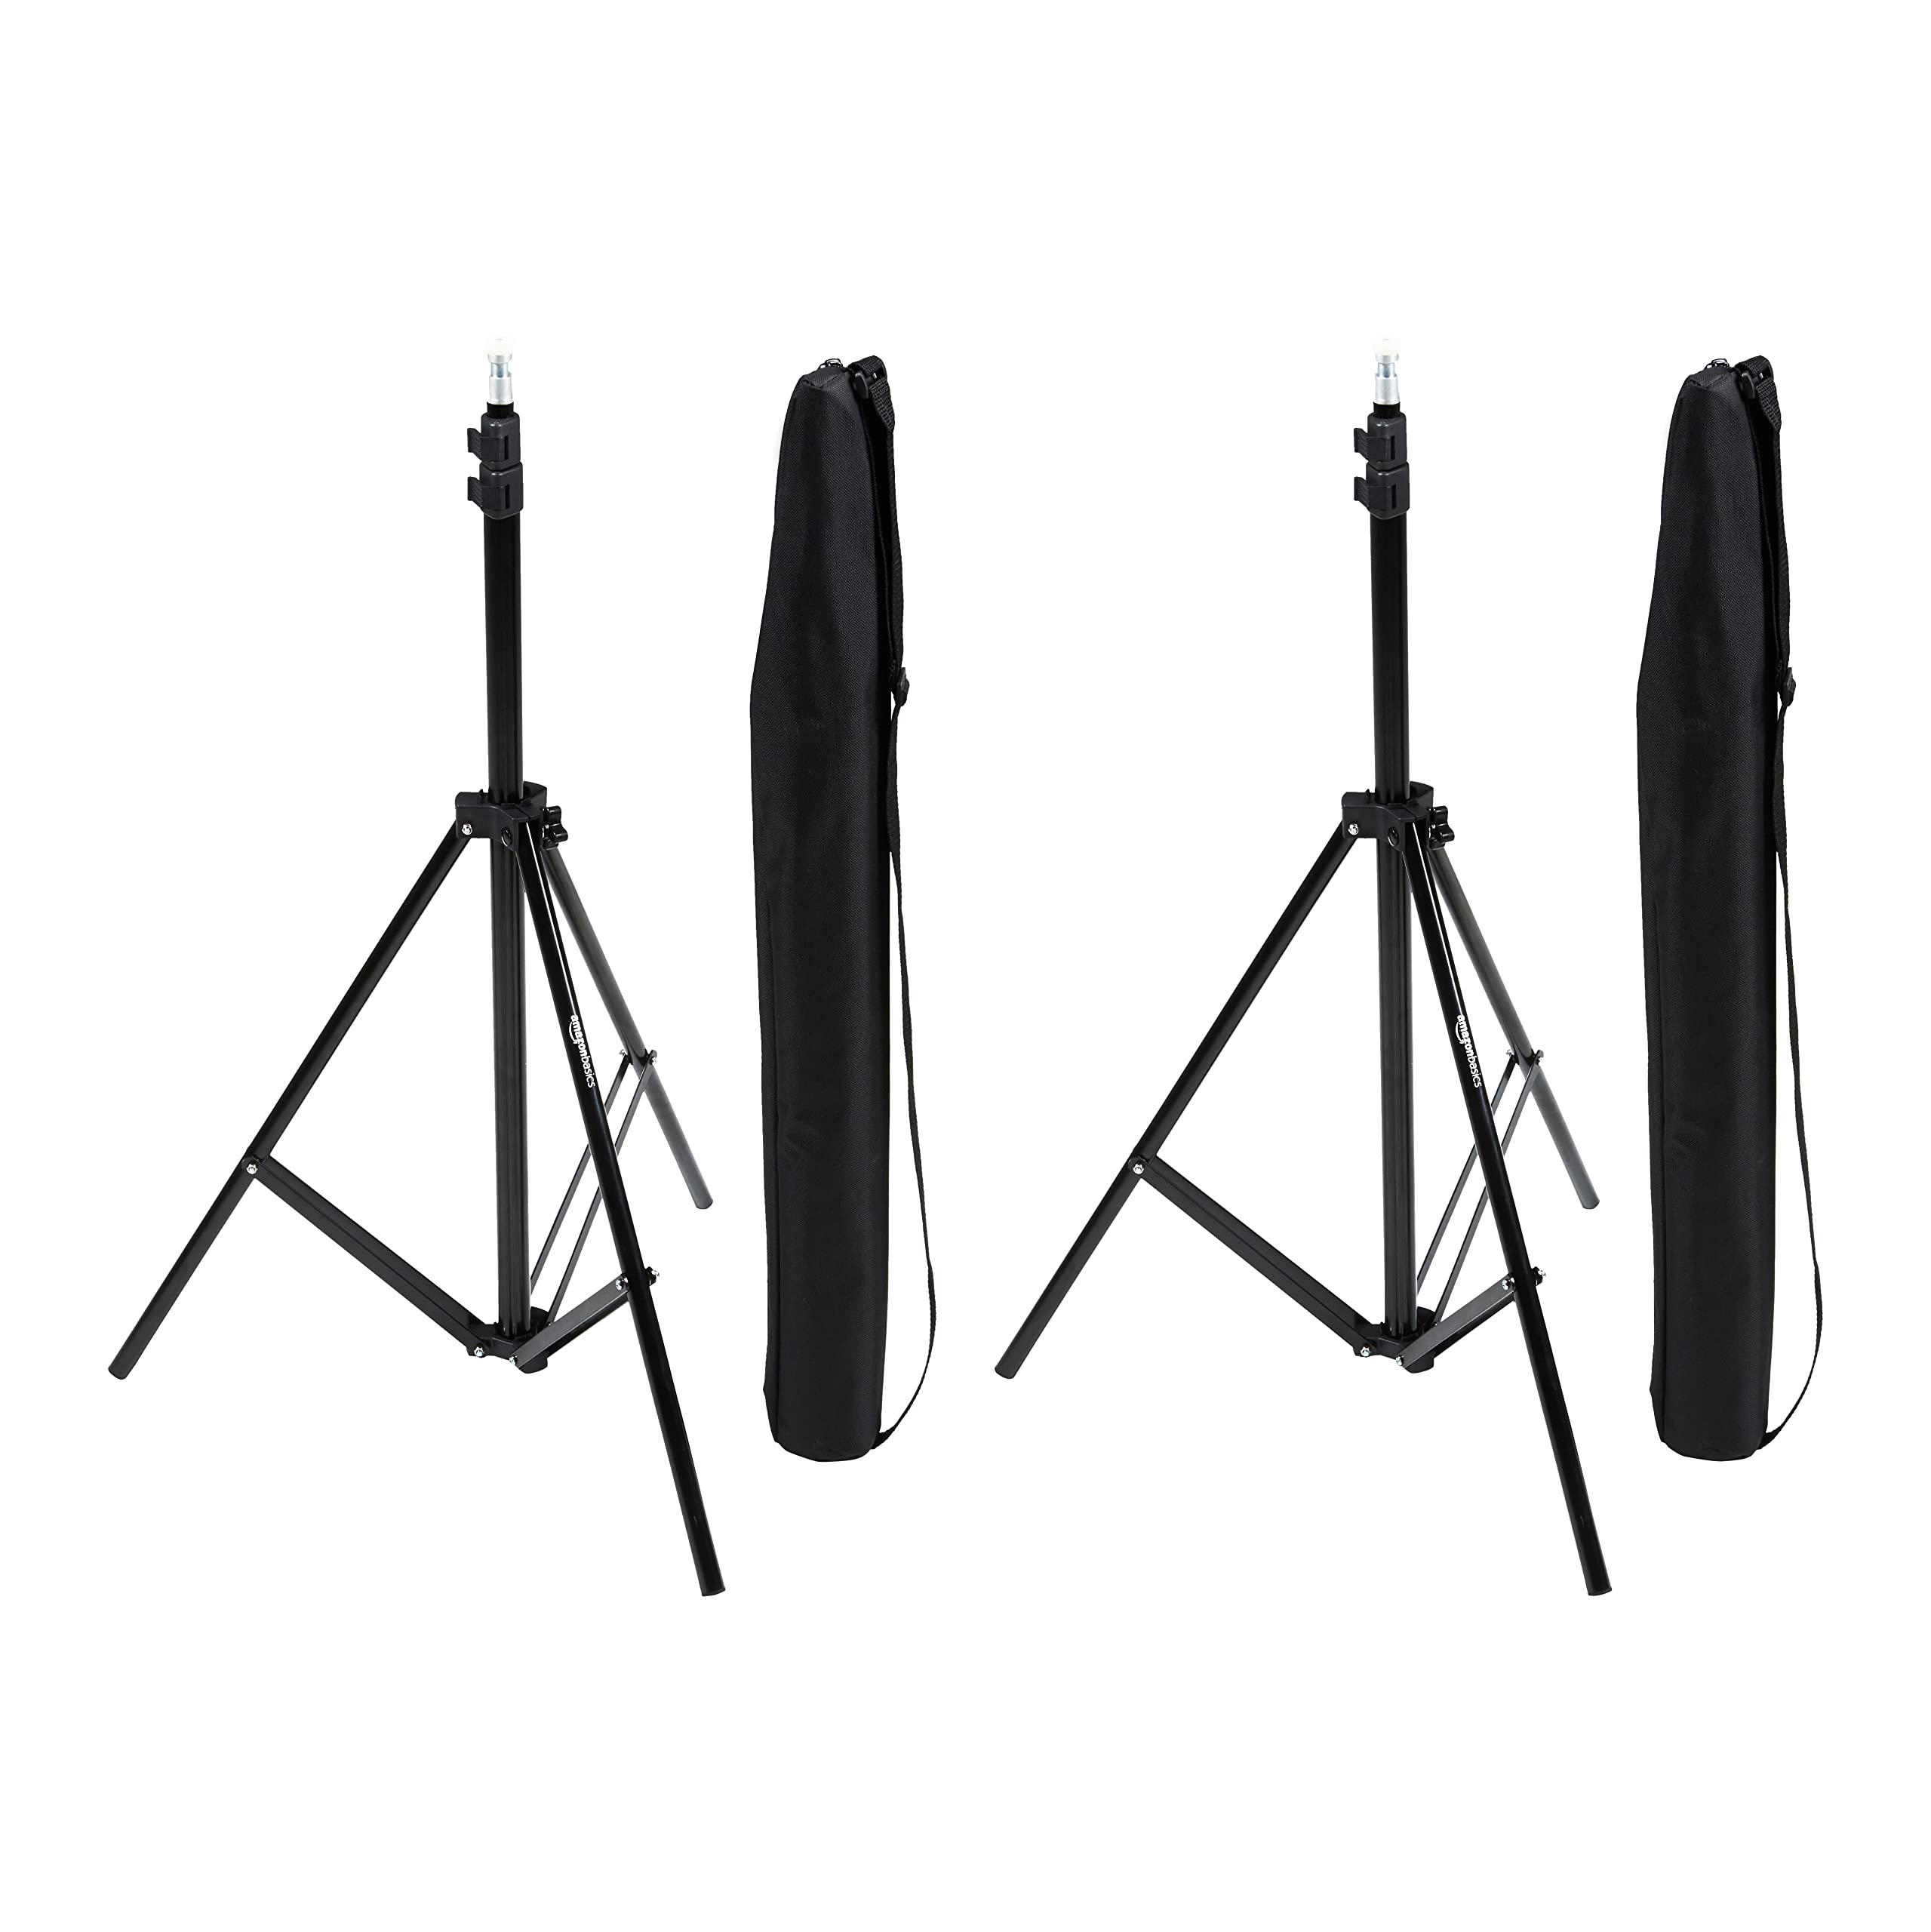 Amazon Basics Aluminum Light Photography Tripod Stand with Case - Pack of 2, 2.8 - 6.7 Feet, 3.66 Pounds, Black